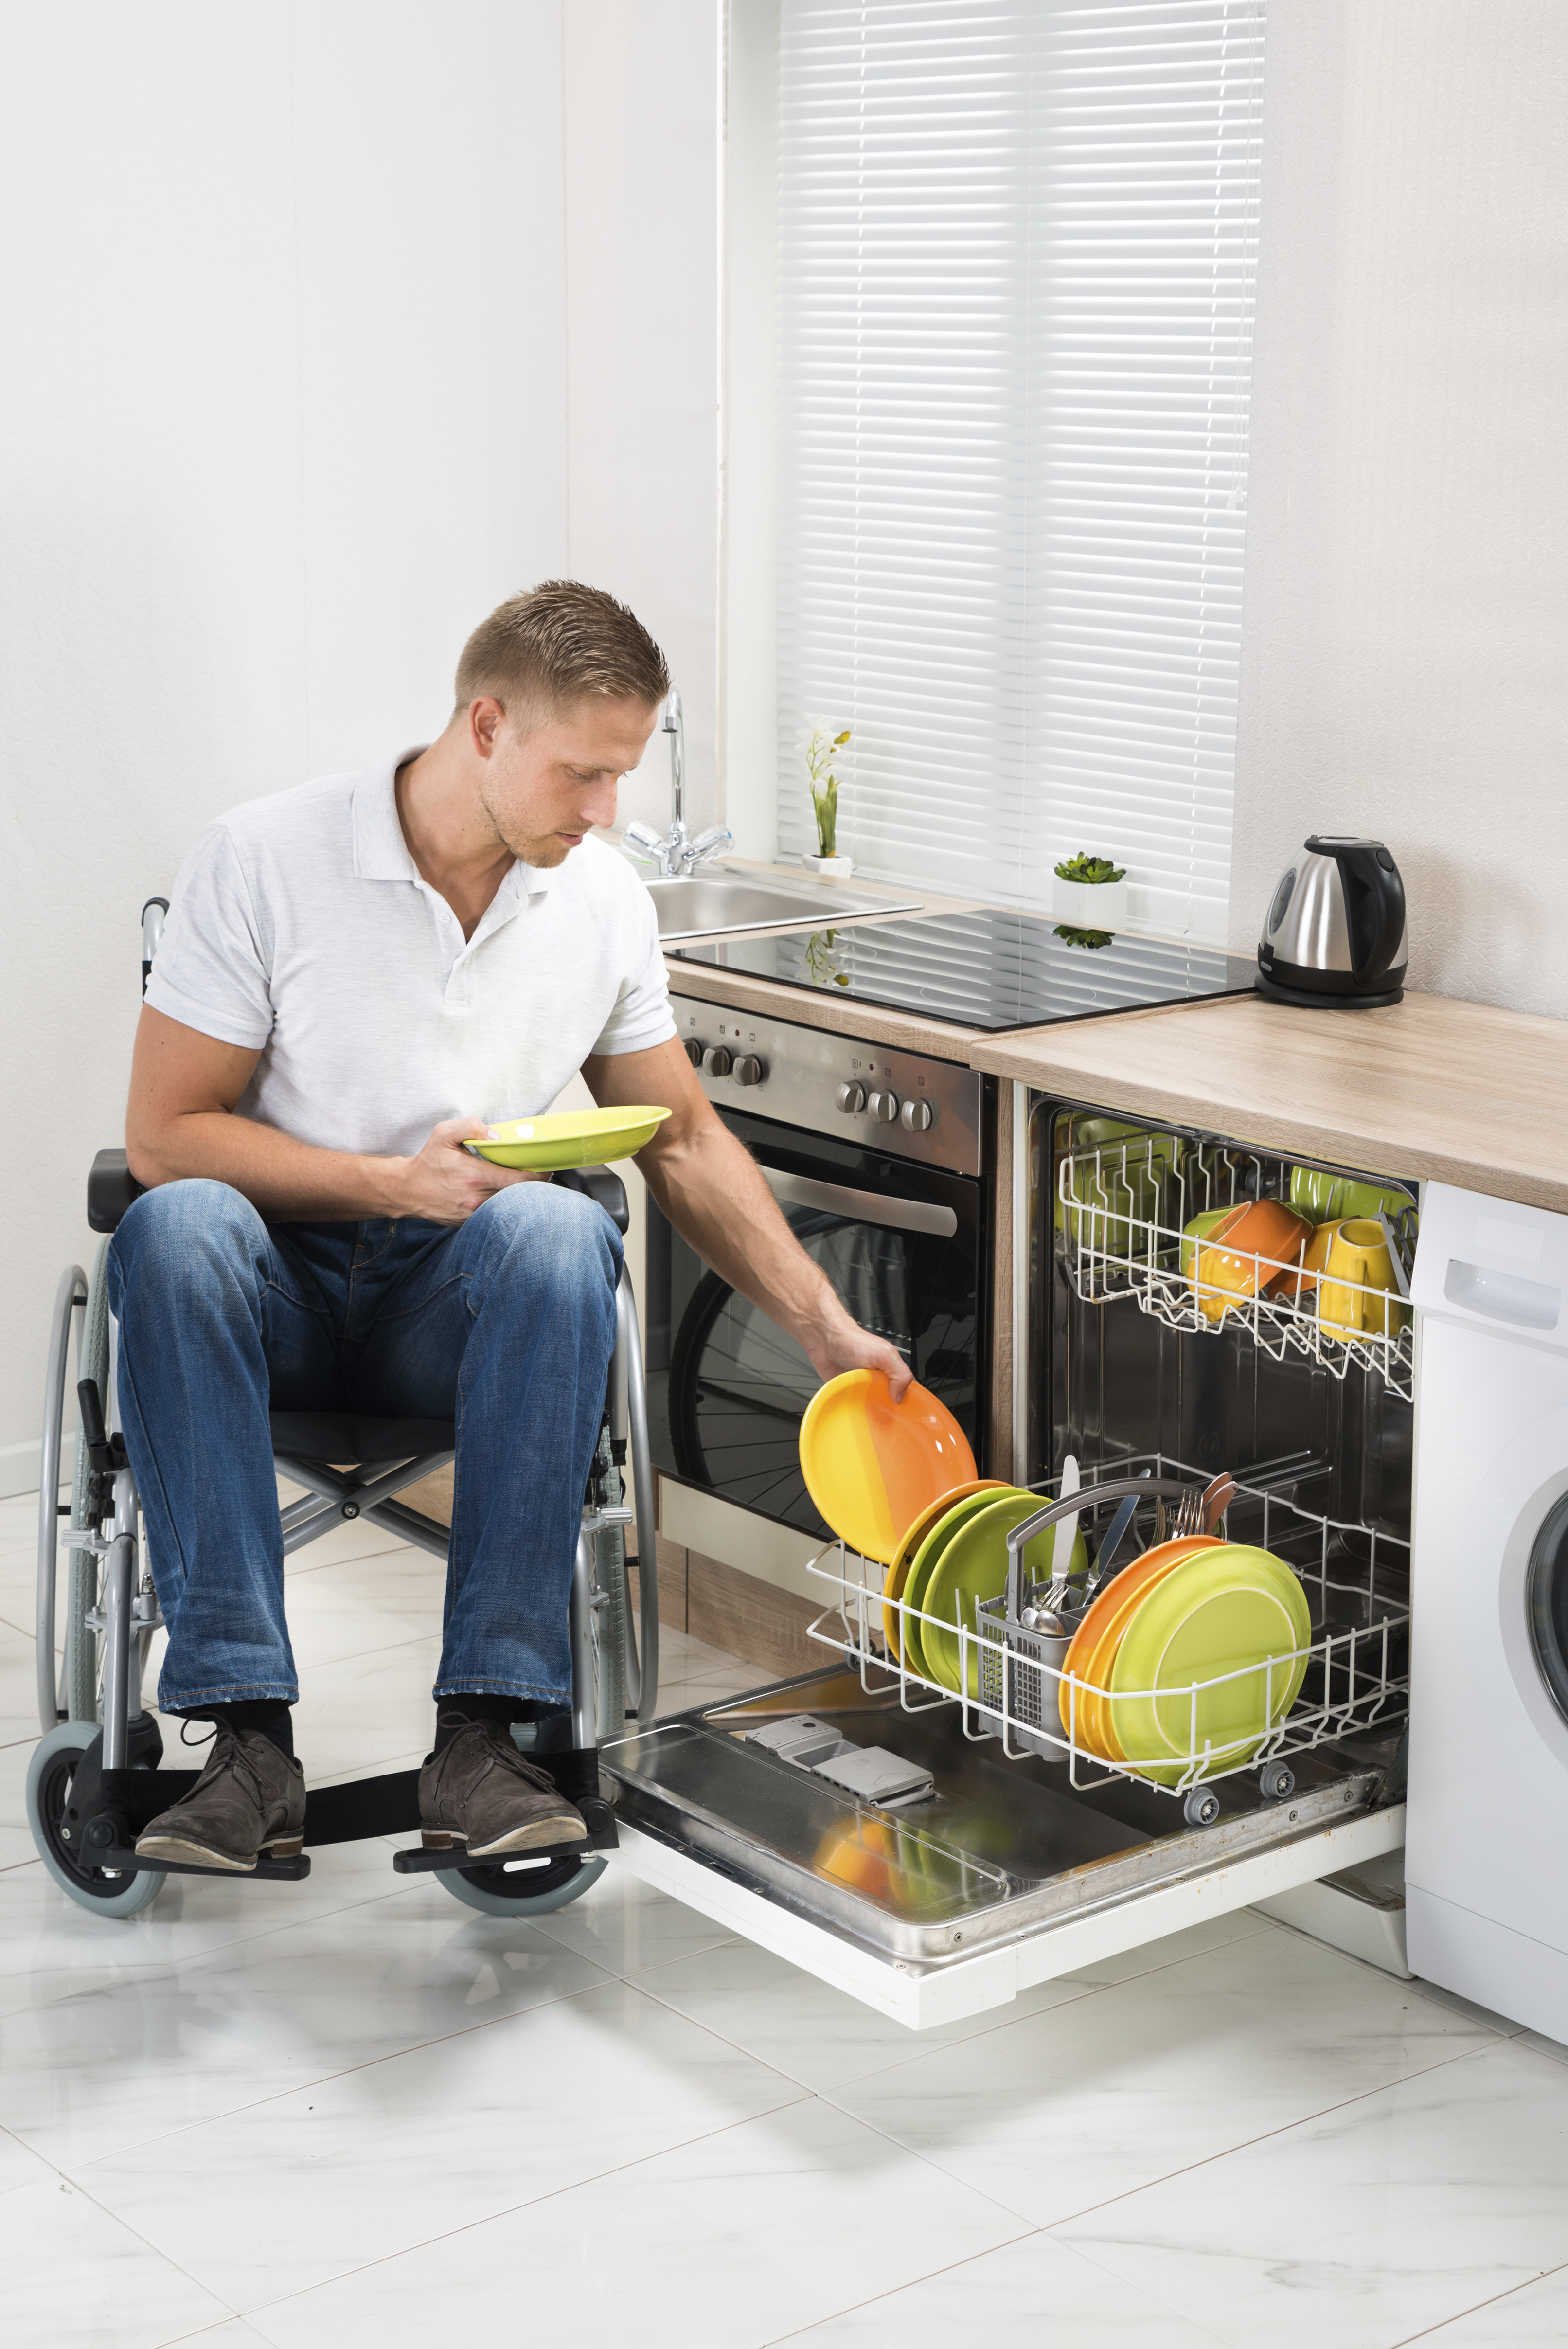 Younger wheelchair user in kitchen